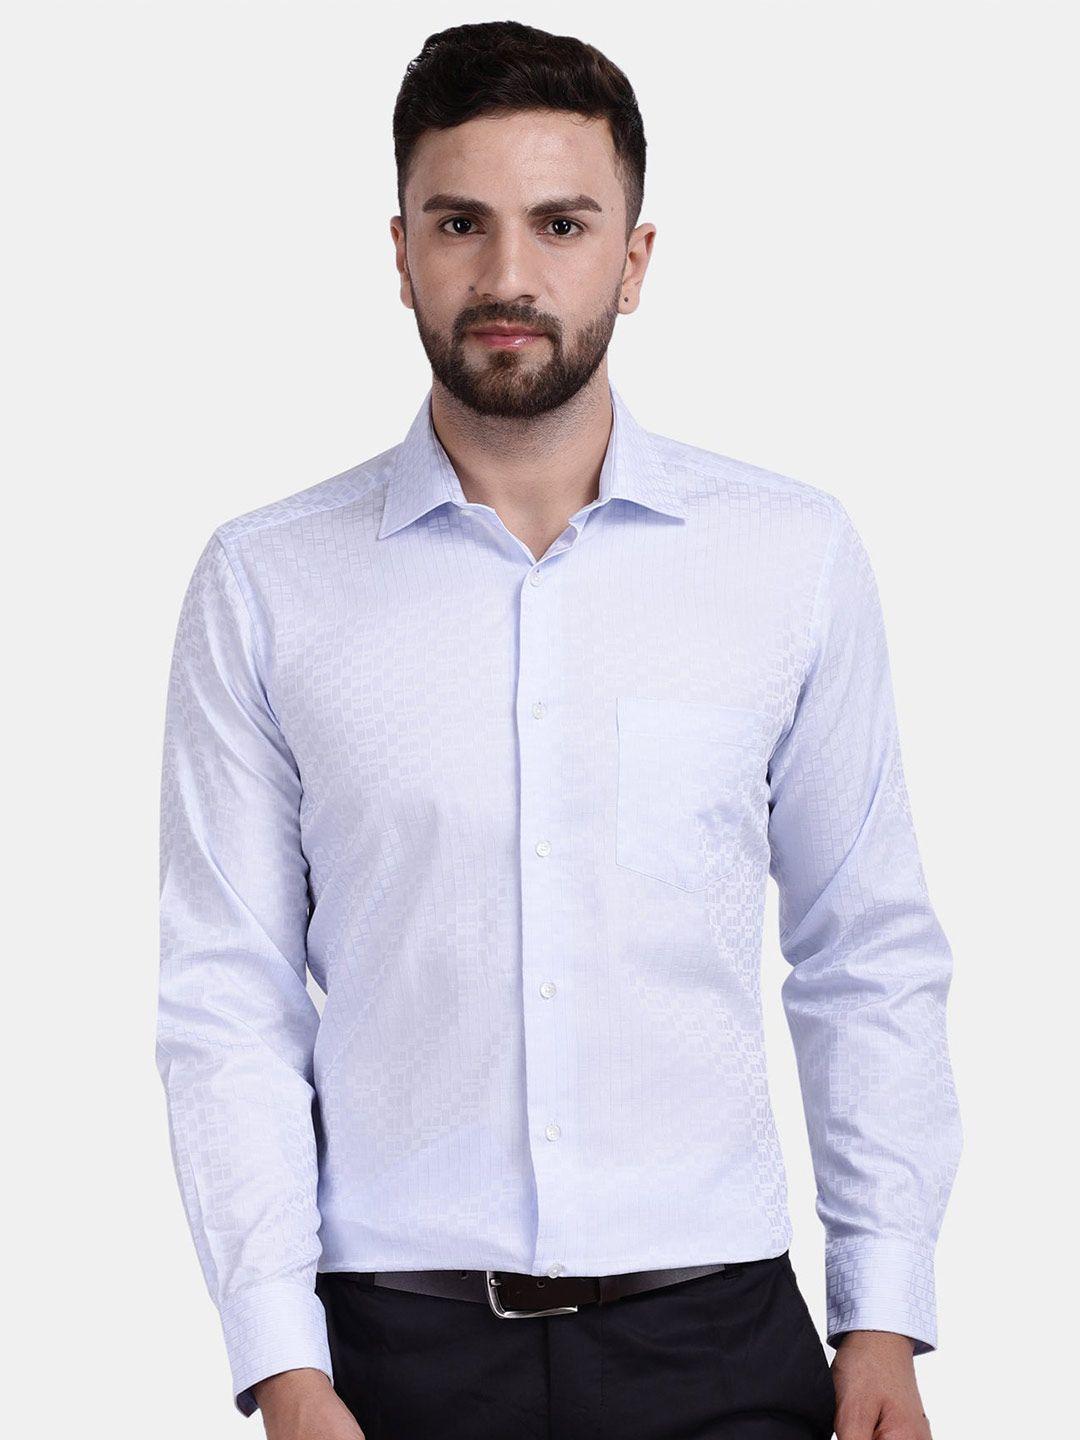 cotstyle premium textured cotton formal shirt